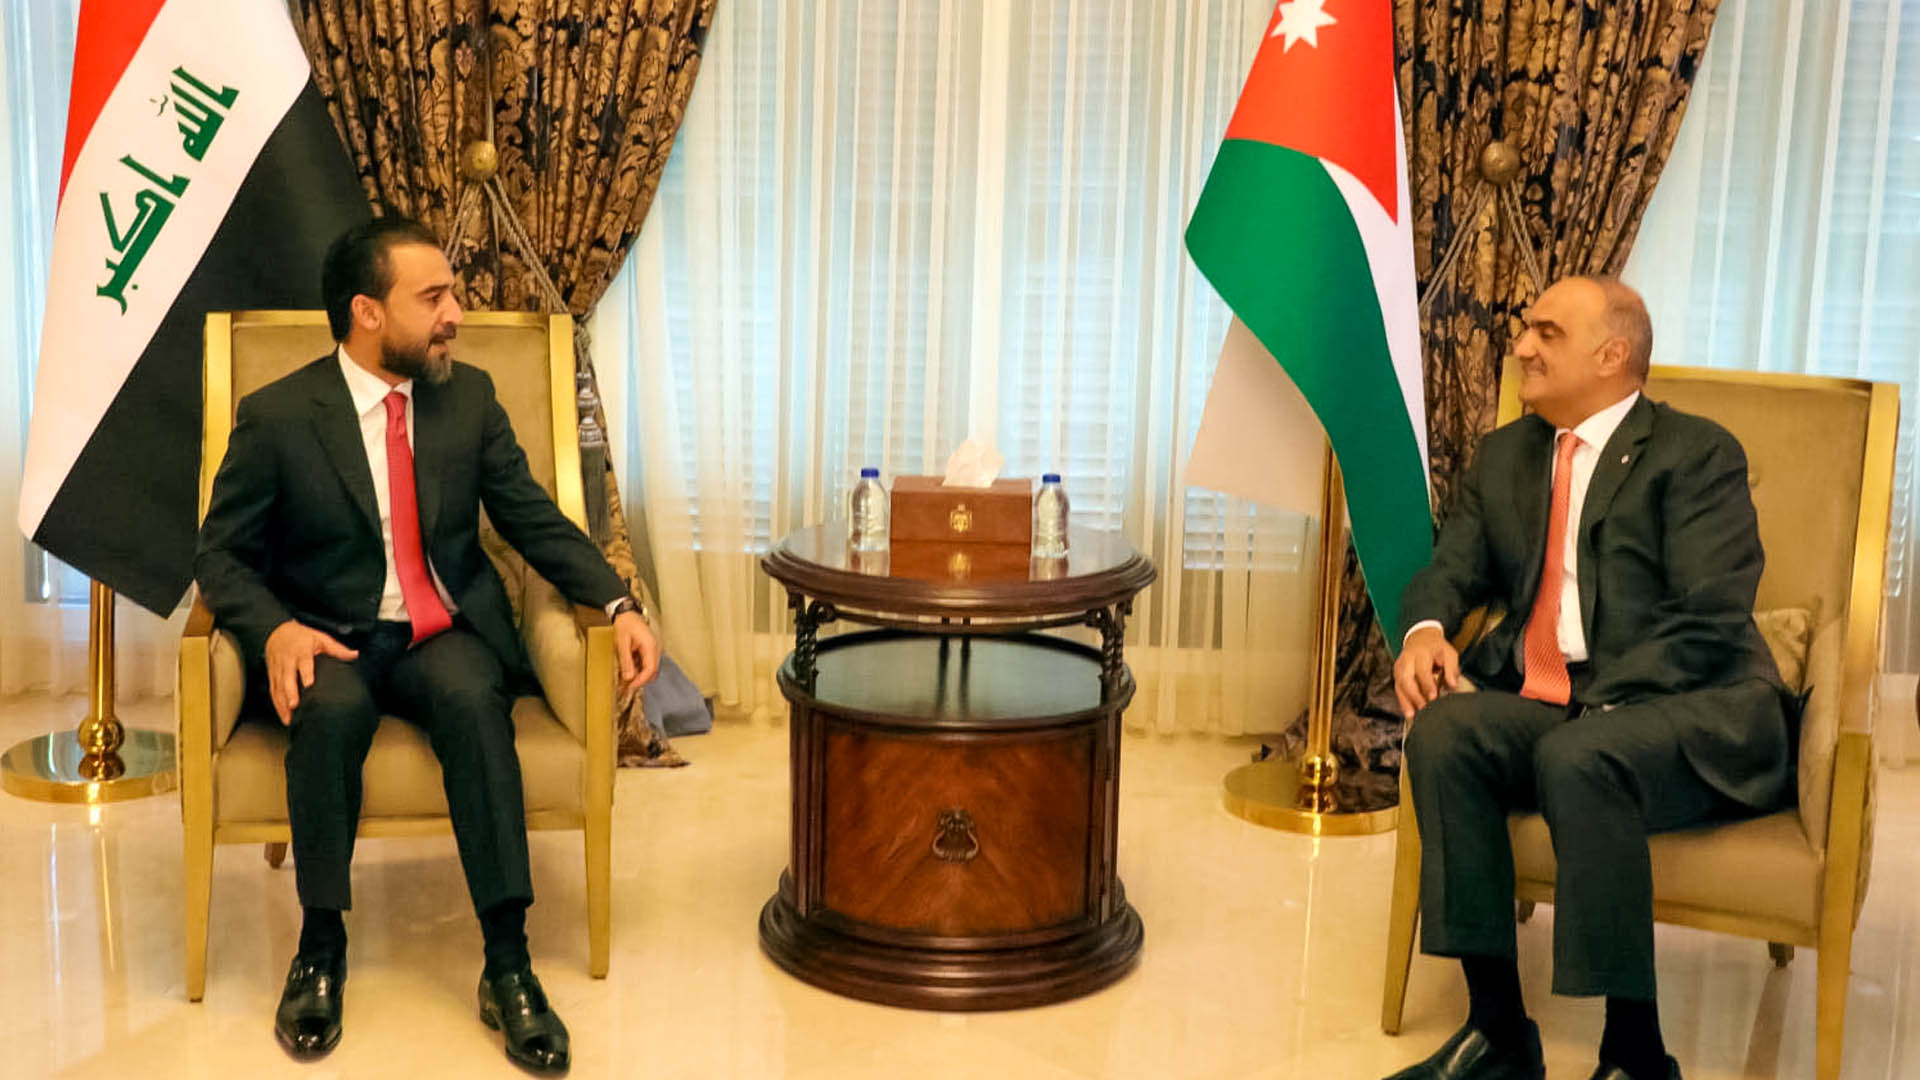 Jordan PM and Iraqi parliament speaker discuss ties